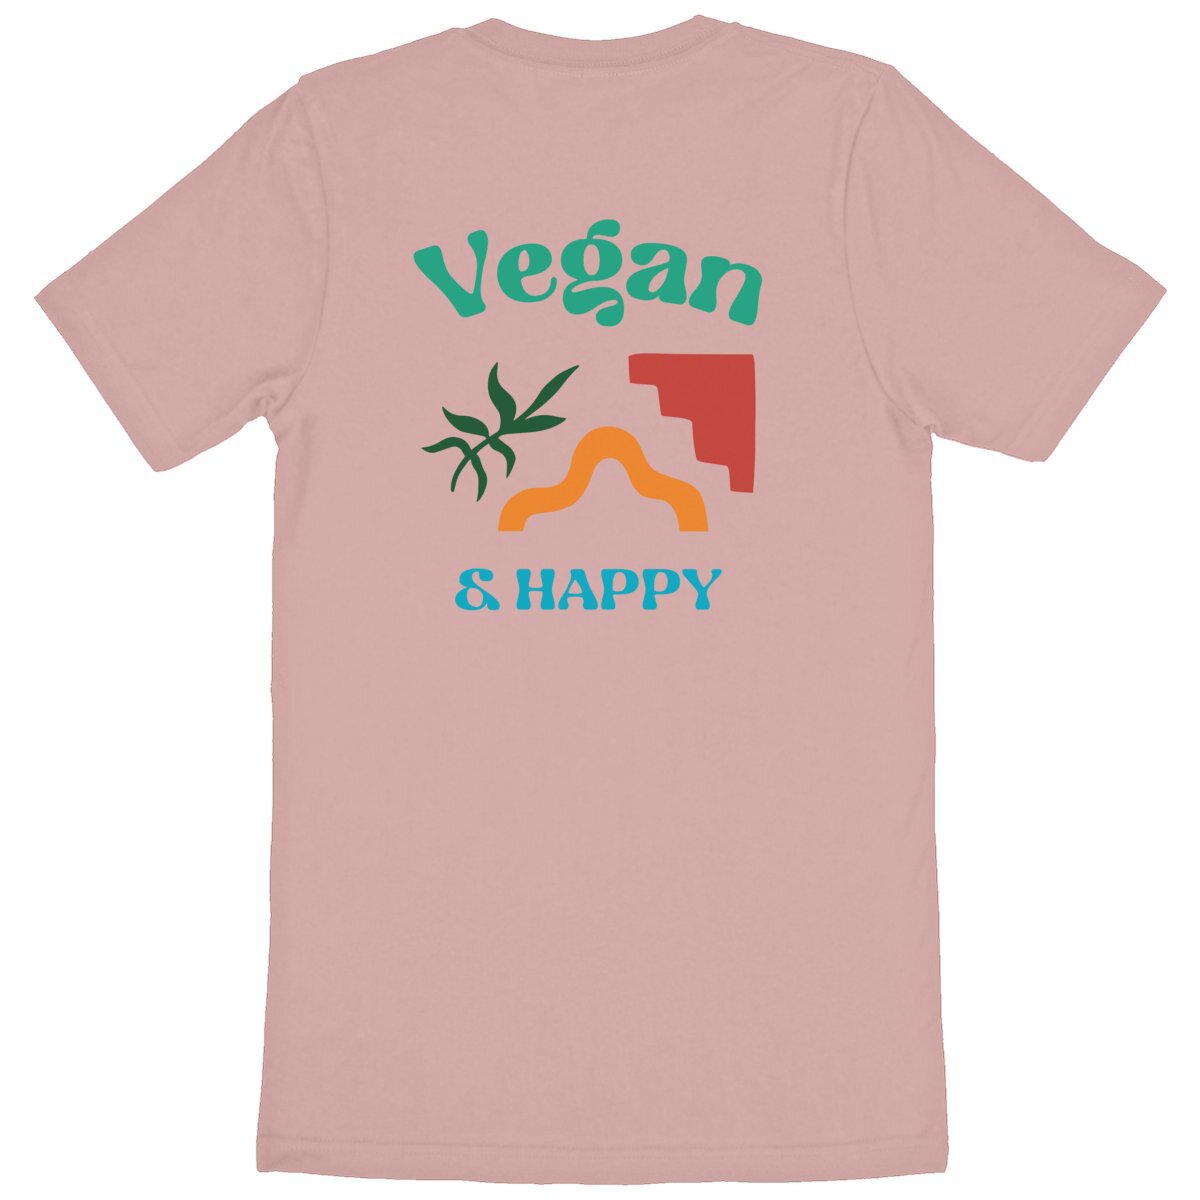 Vegan and Happy - Unisex Organic T-shirt